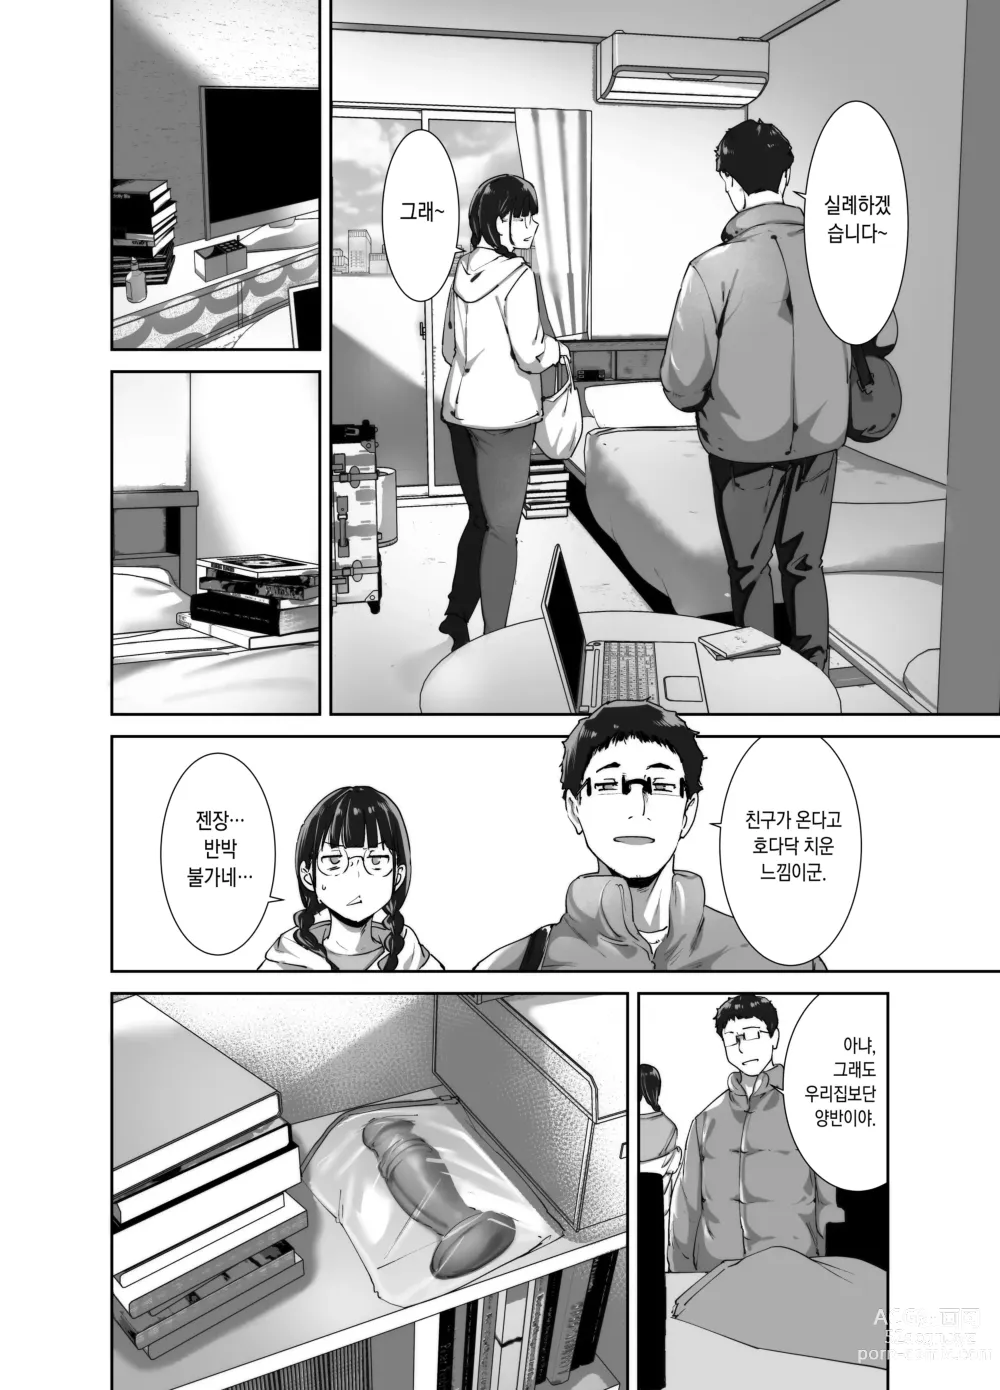 Page 26 of doujinshi 오타쿠 친구랑 하는 섹스는 최고로 기분 좋다2